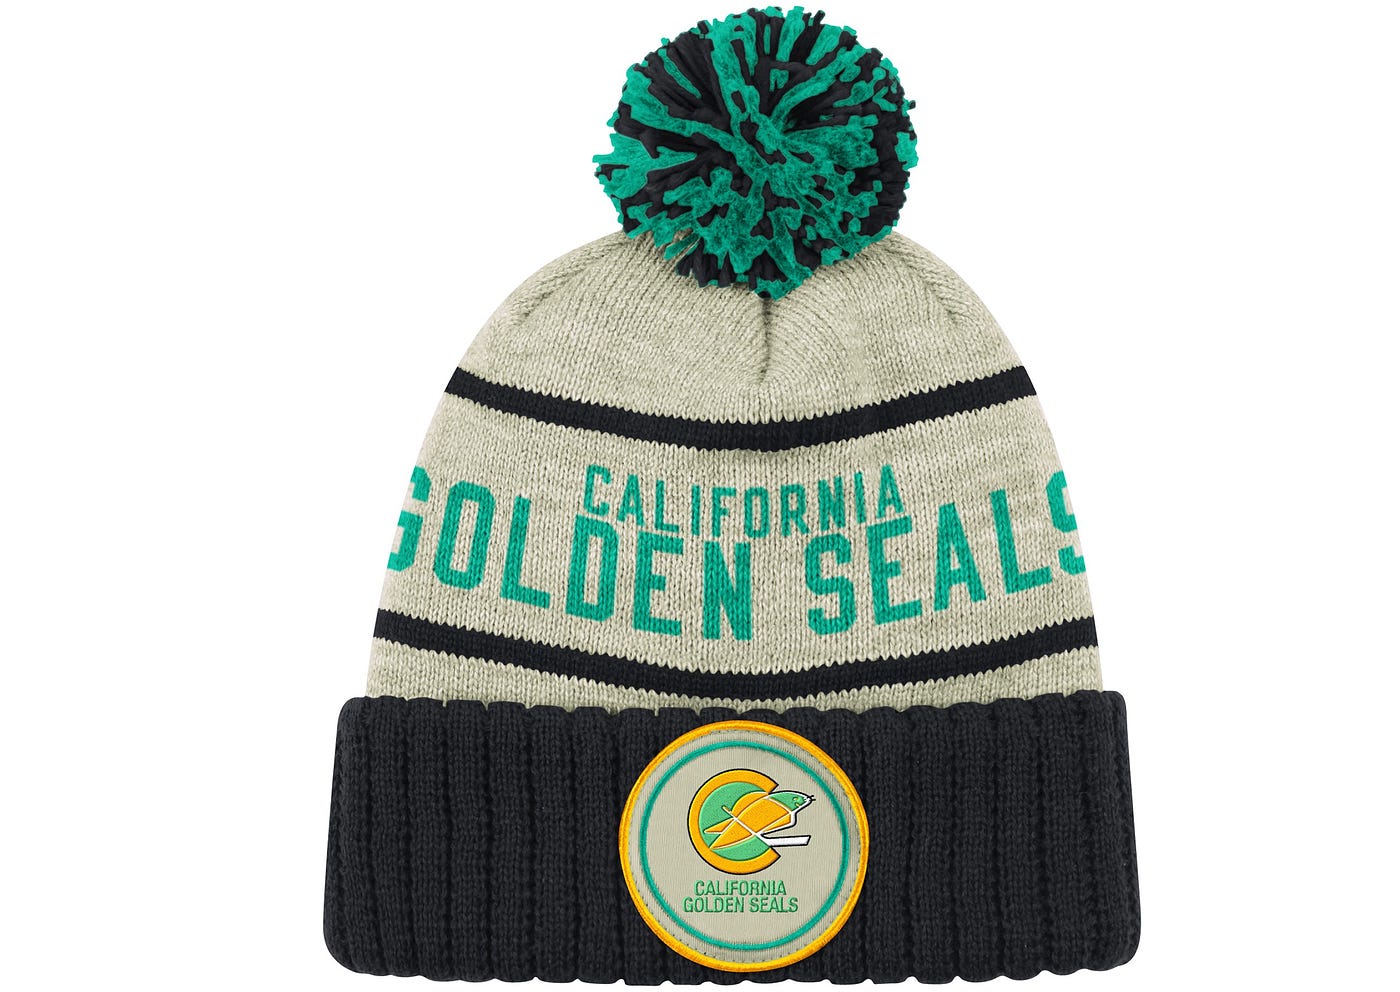 A seal wore the 1976 California Golden Seals Jersey